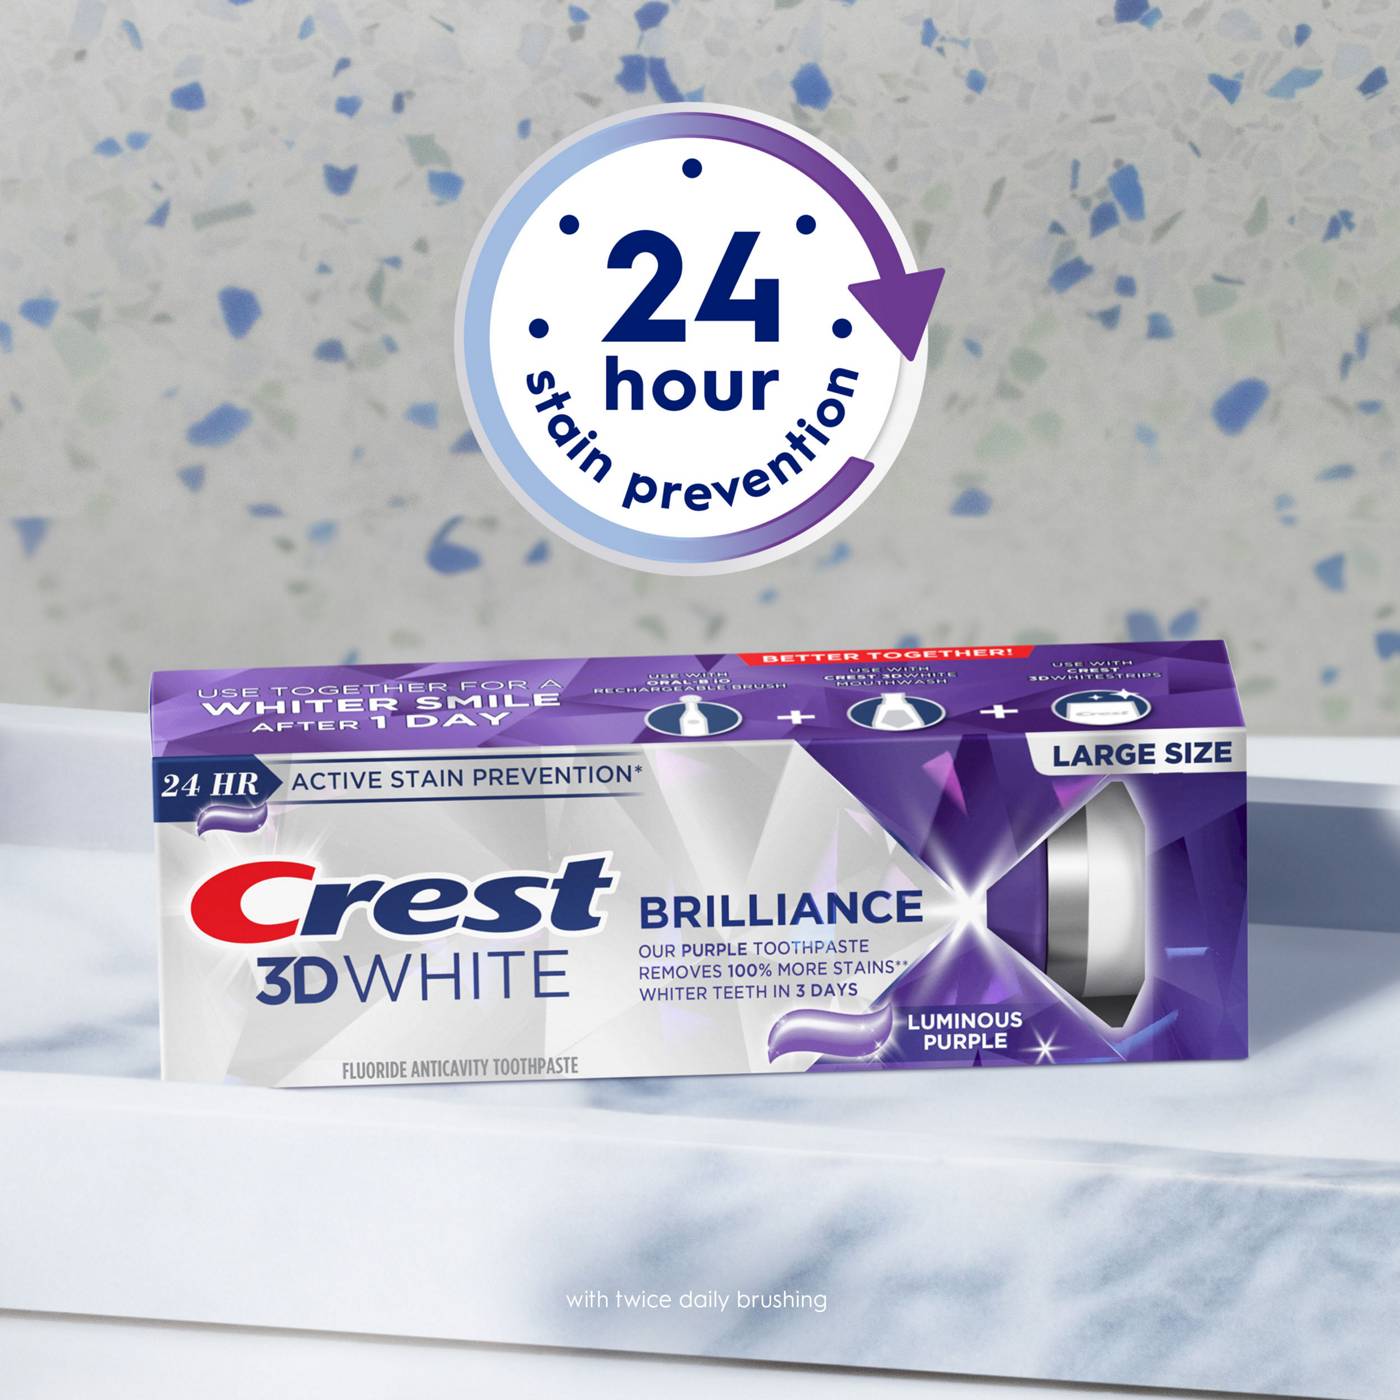 Crest 3D White Brilliance Toothpaste - Luminous Purple; image 3 of 8